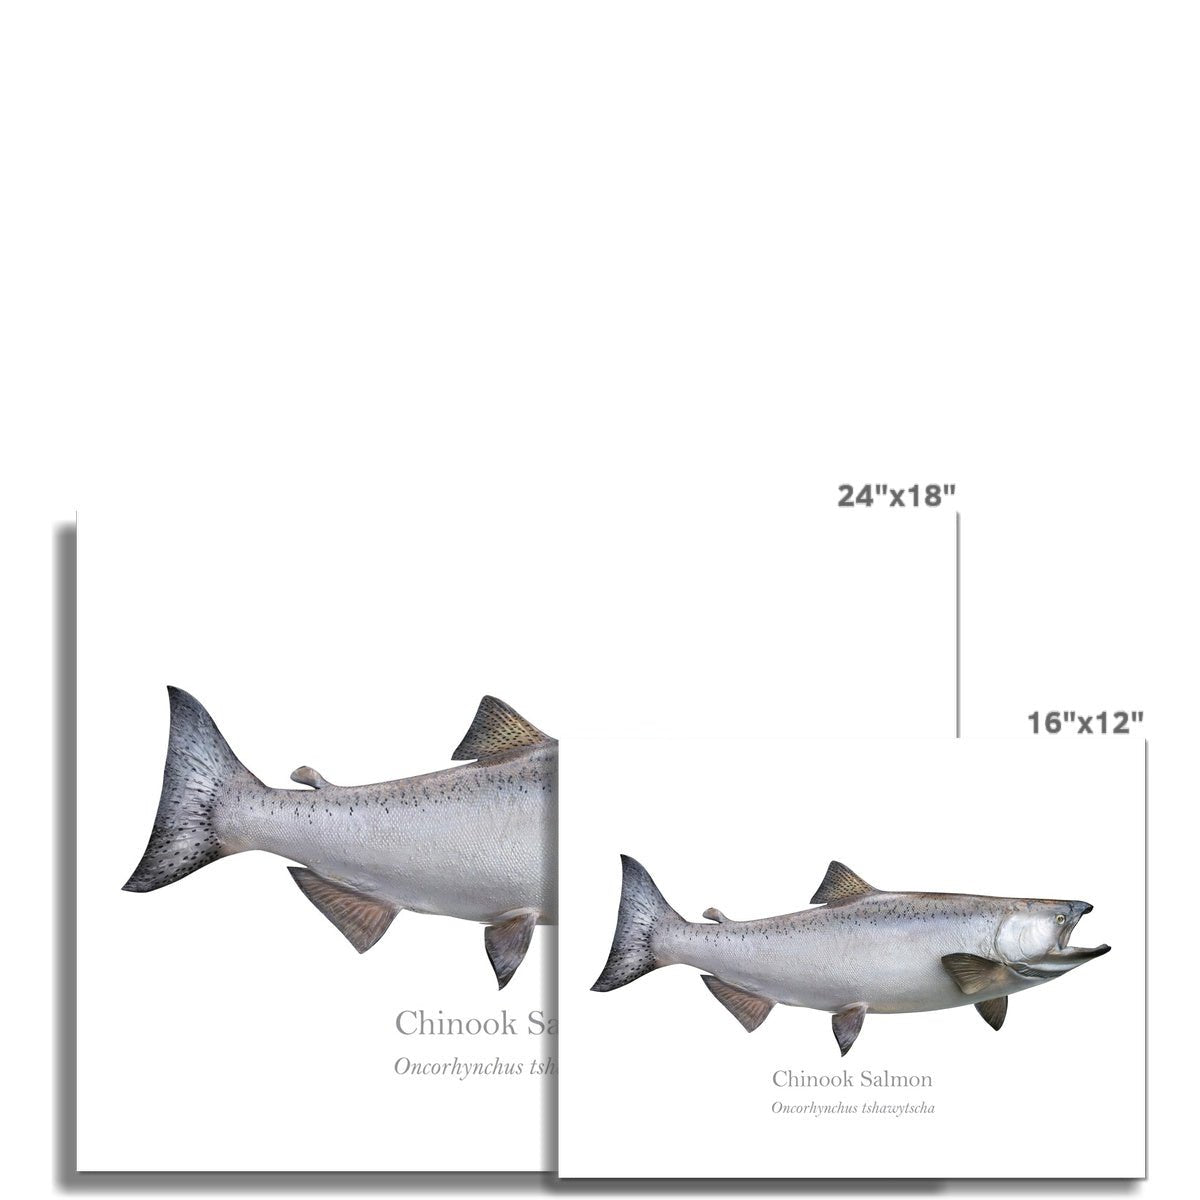 Chinook Salmon - Art Print - With Scientific Name - madfishlab.com